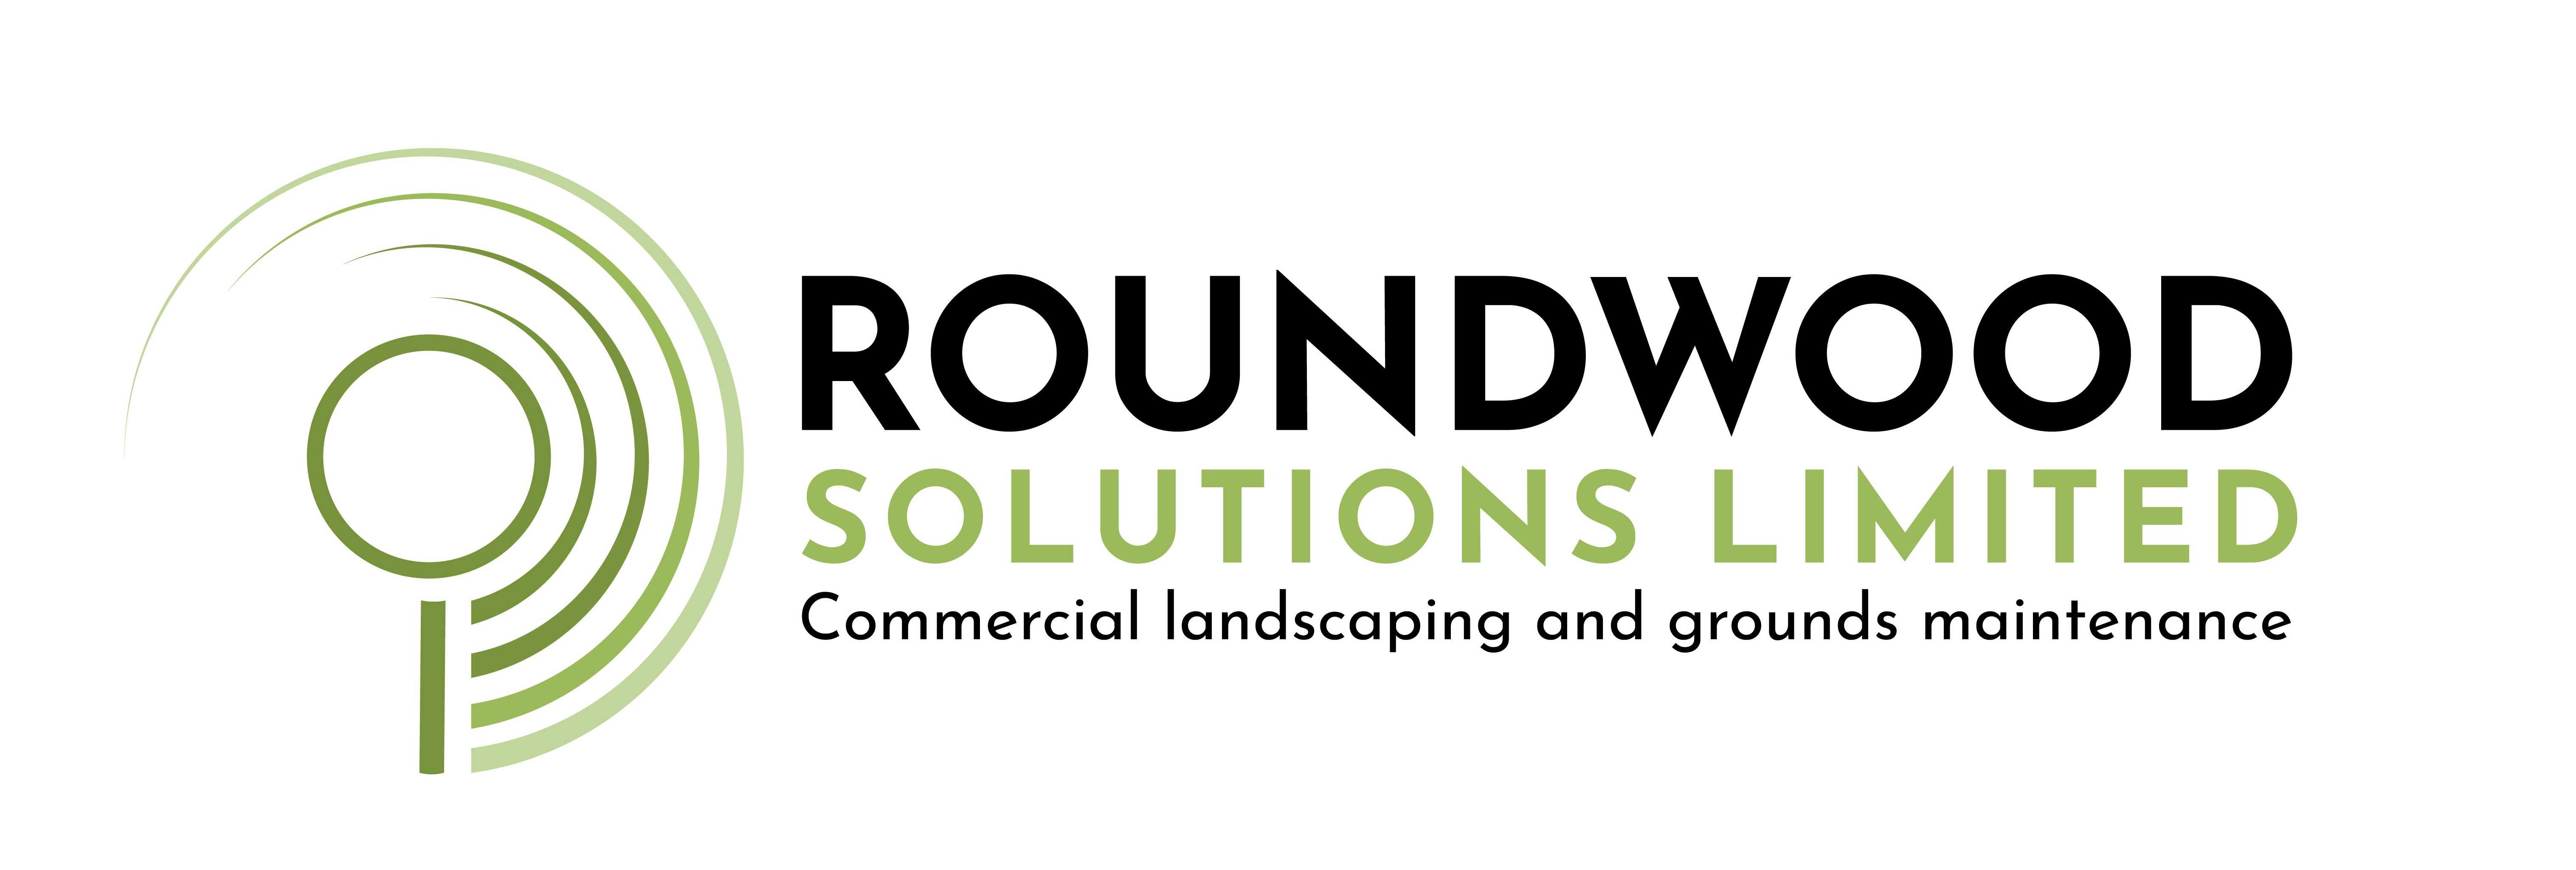 Roundwood solutions LTD